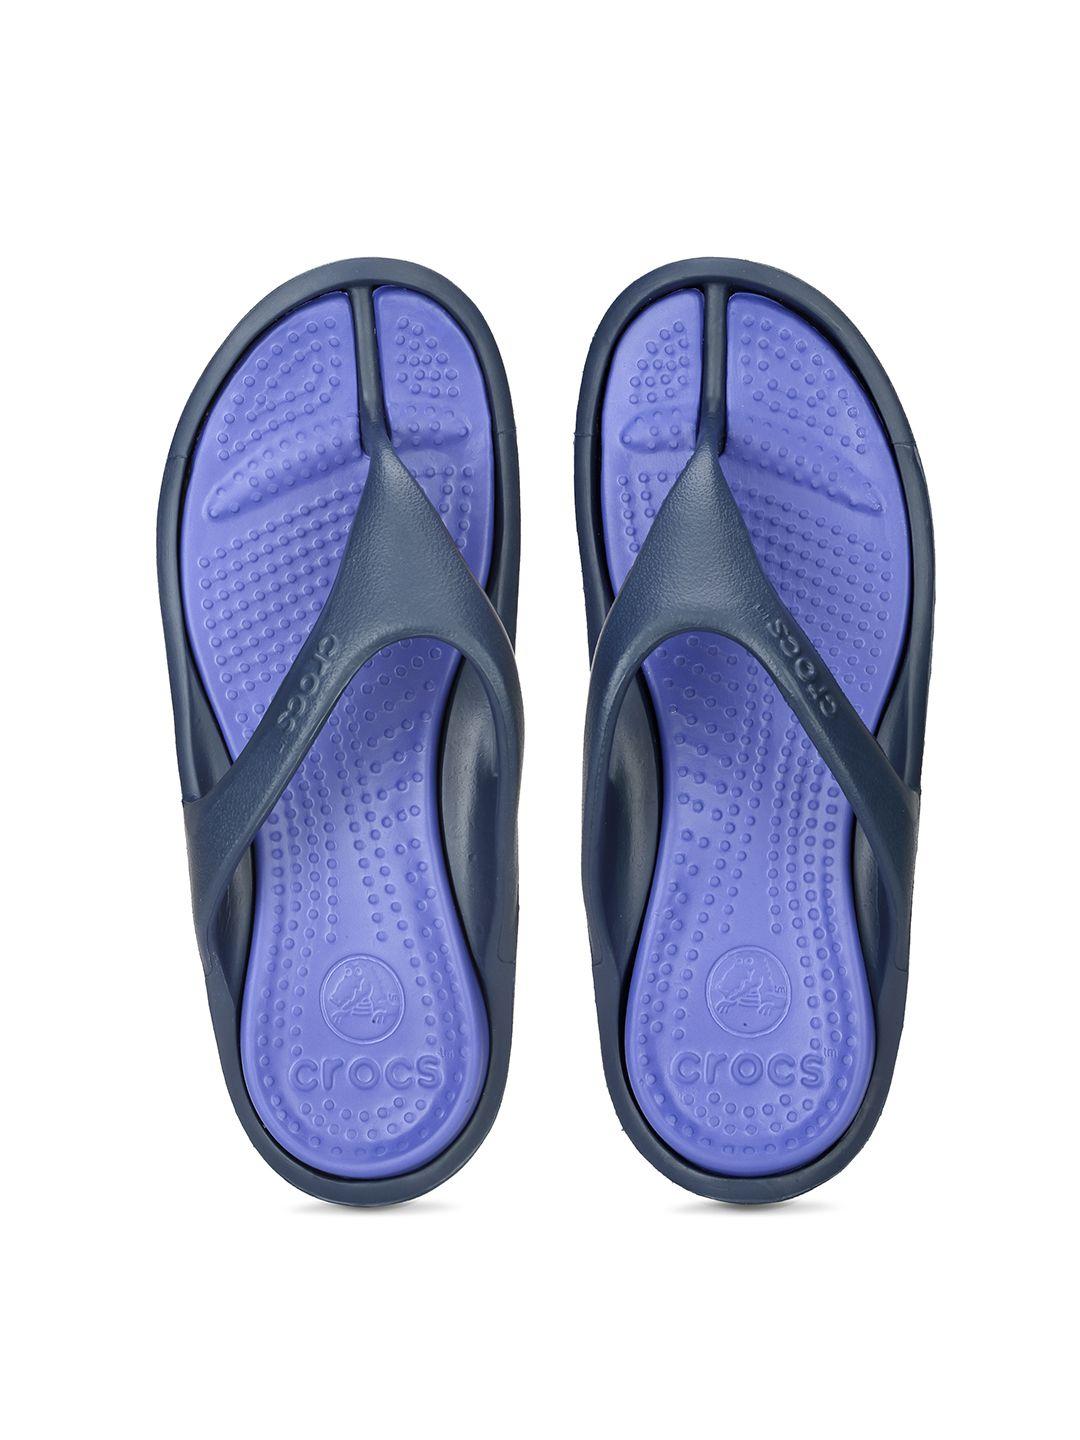 crocs-athens--boys-blue-flip-flops